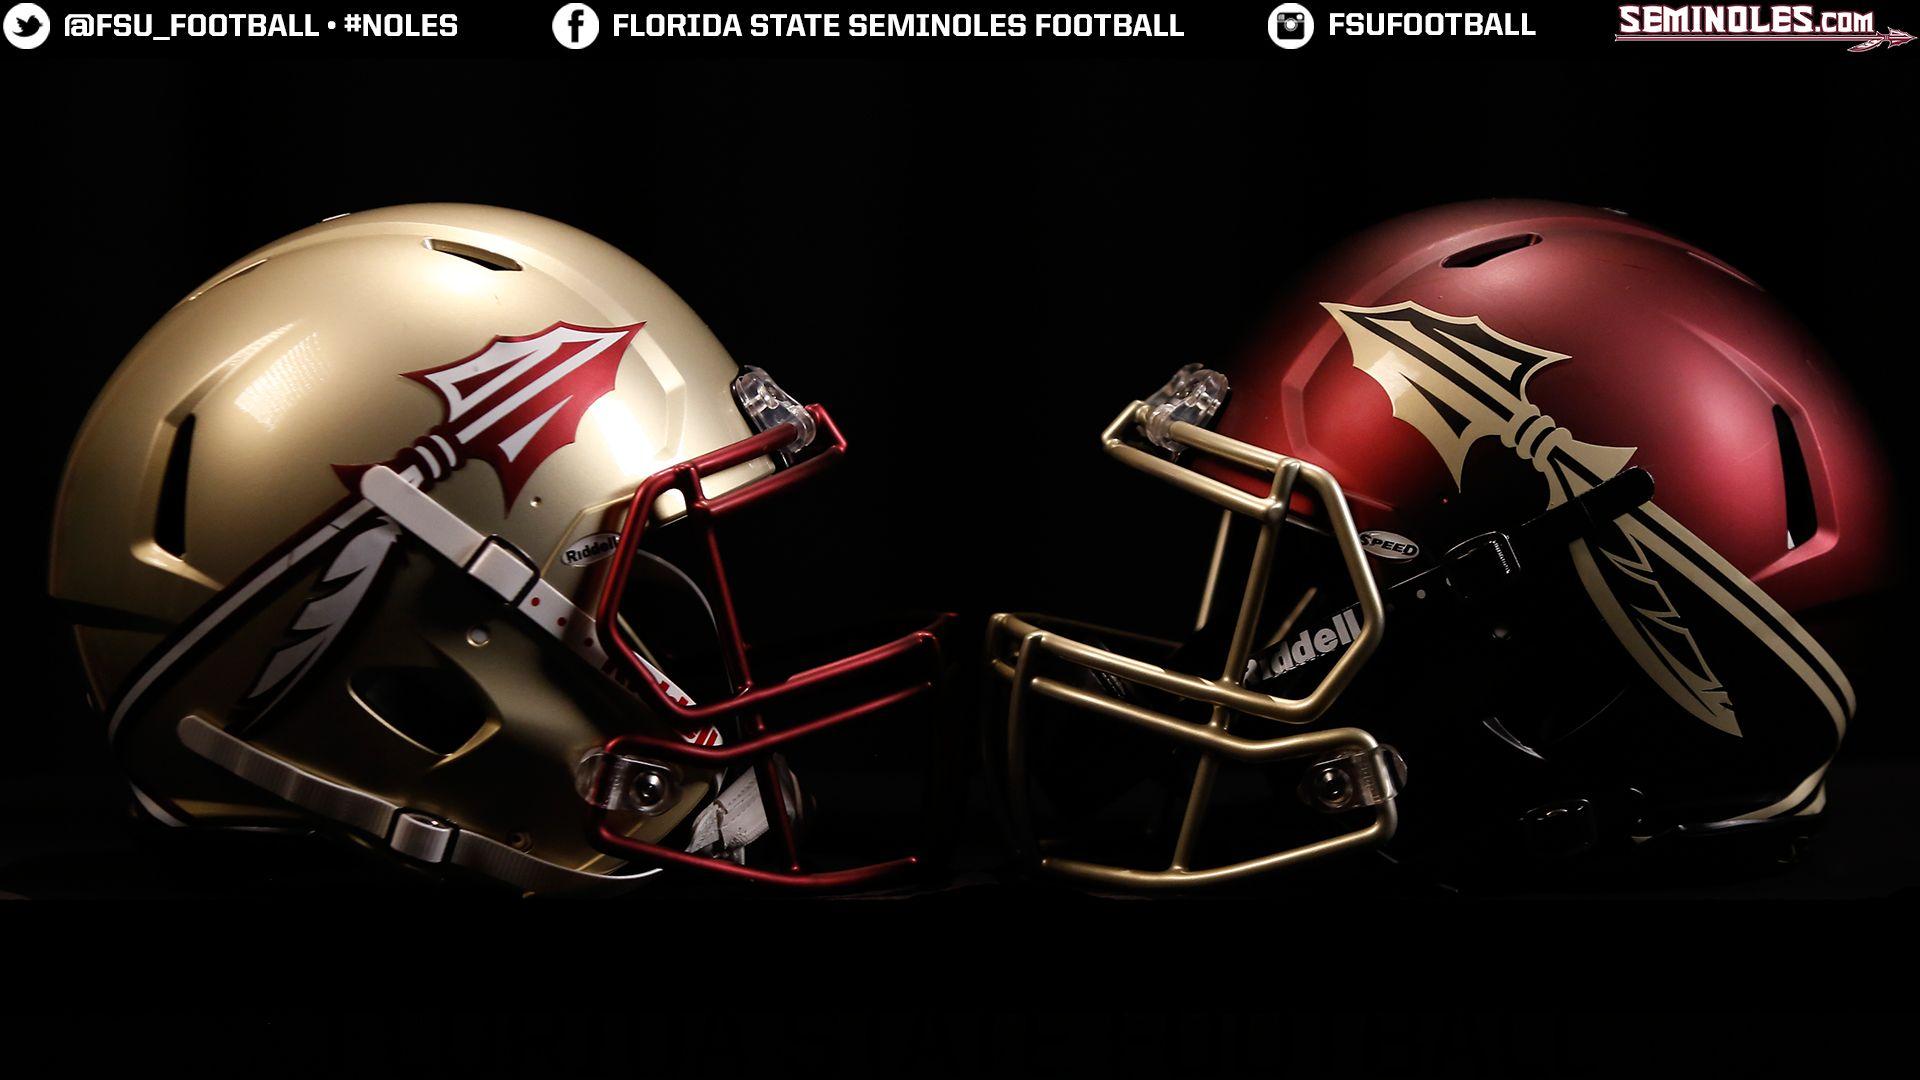 Florida State Seminoles Football Team Logo - Seminoles.com Desktop Wallpapers